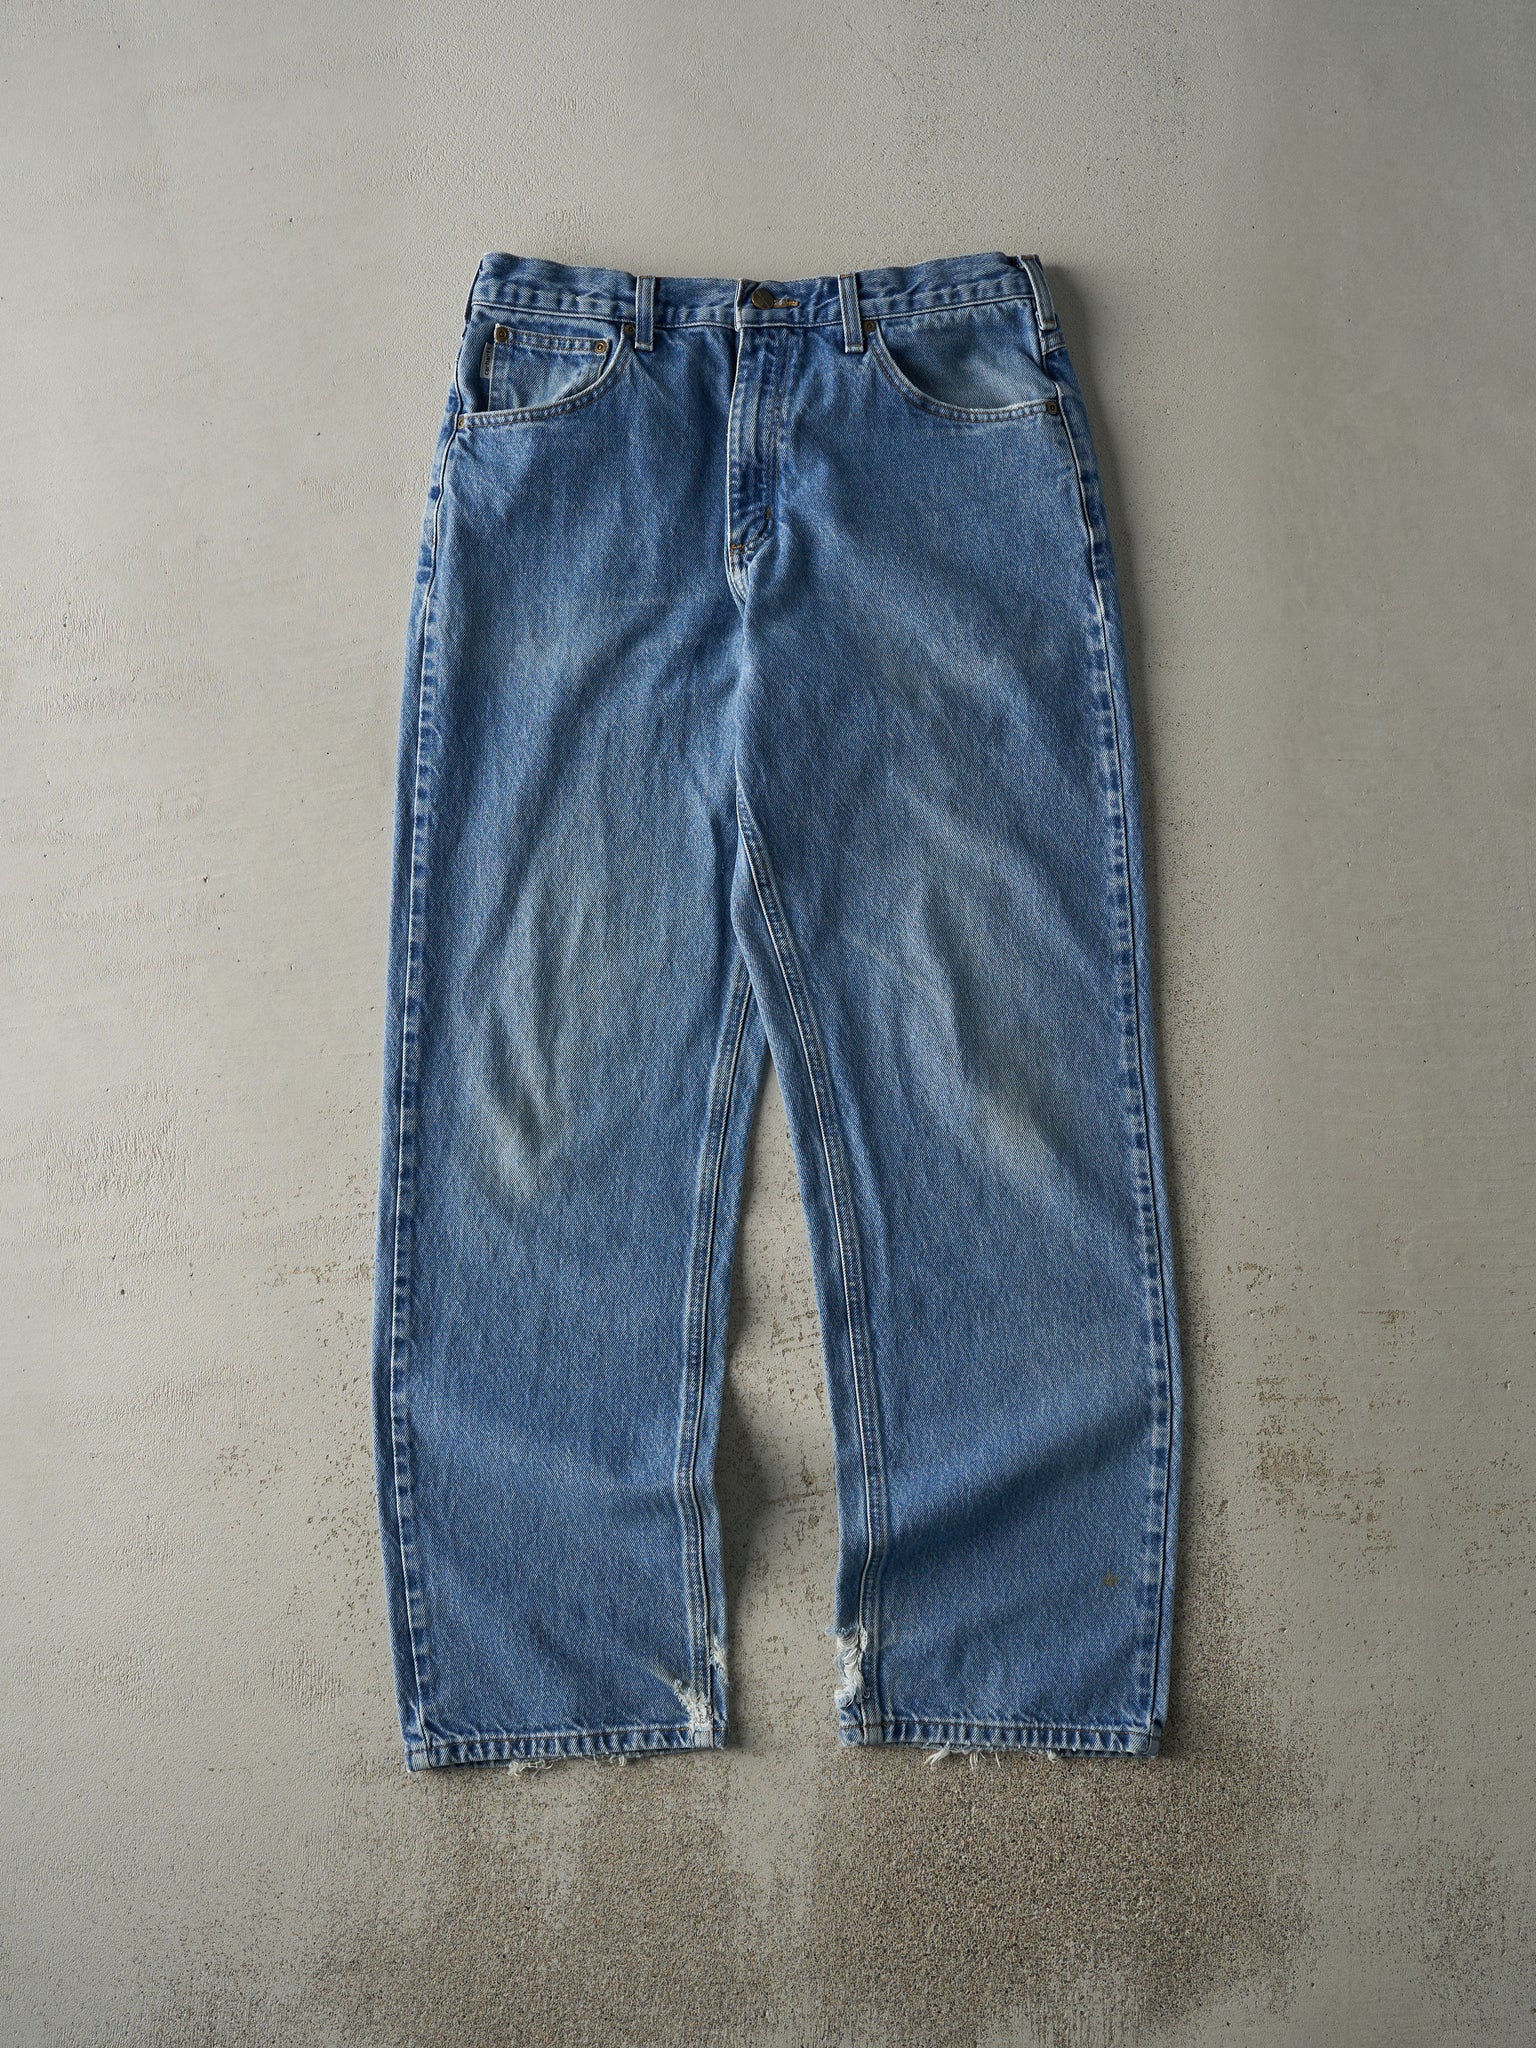 Vintage Y2K Mid Wash Carhartt Jeans (34x33.5)